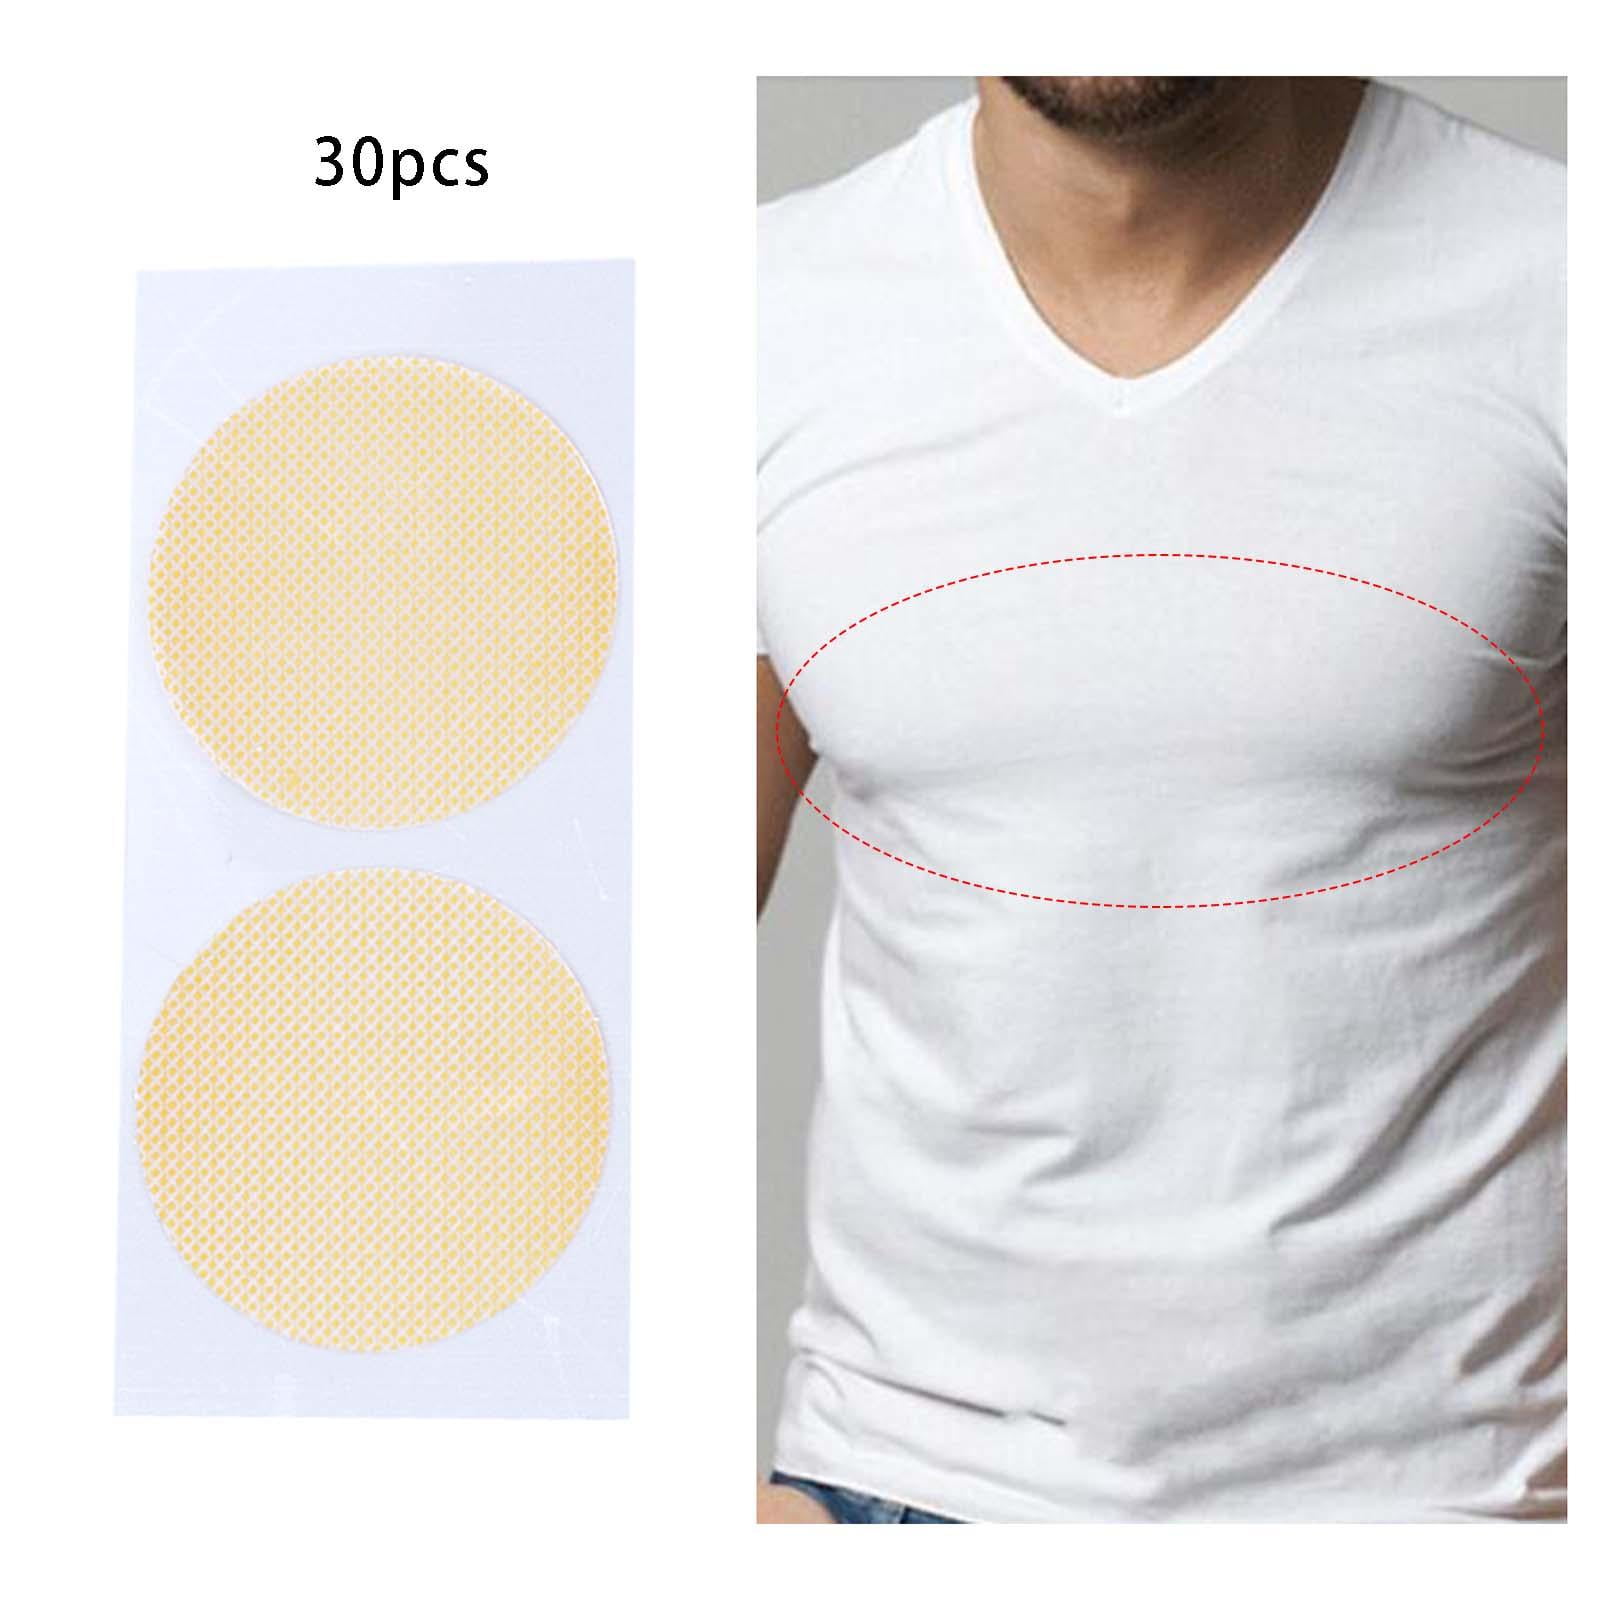 30pcs Men Nipple Cover Adhesive Stickers Bra Pad Breast Women